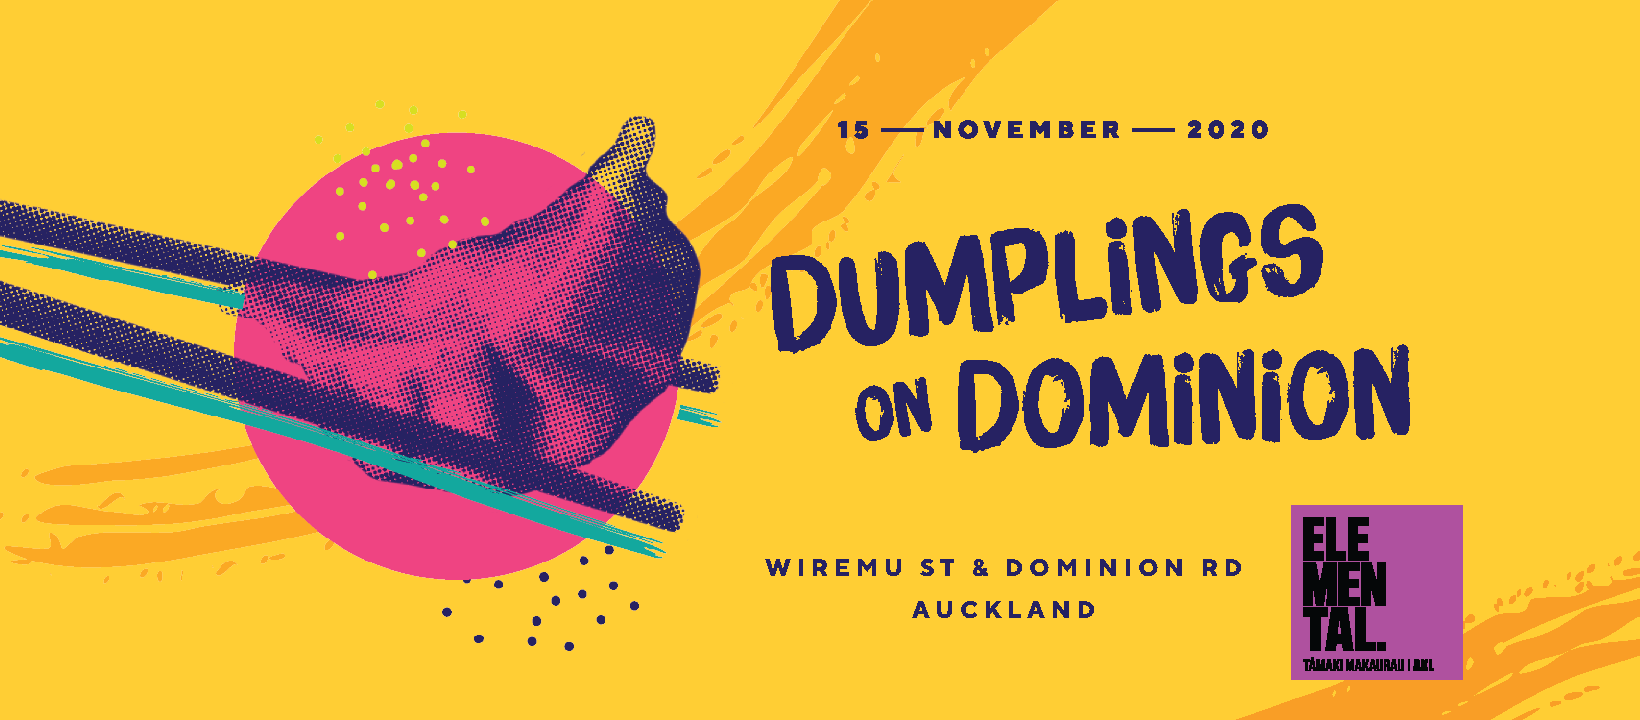 Dumplings on Dominion FB Cover 1 002